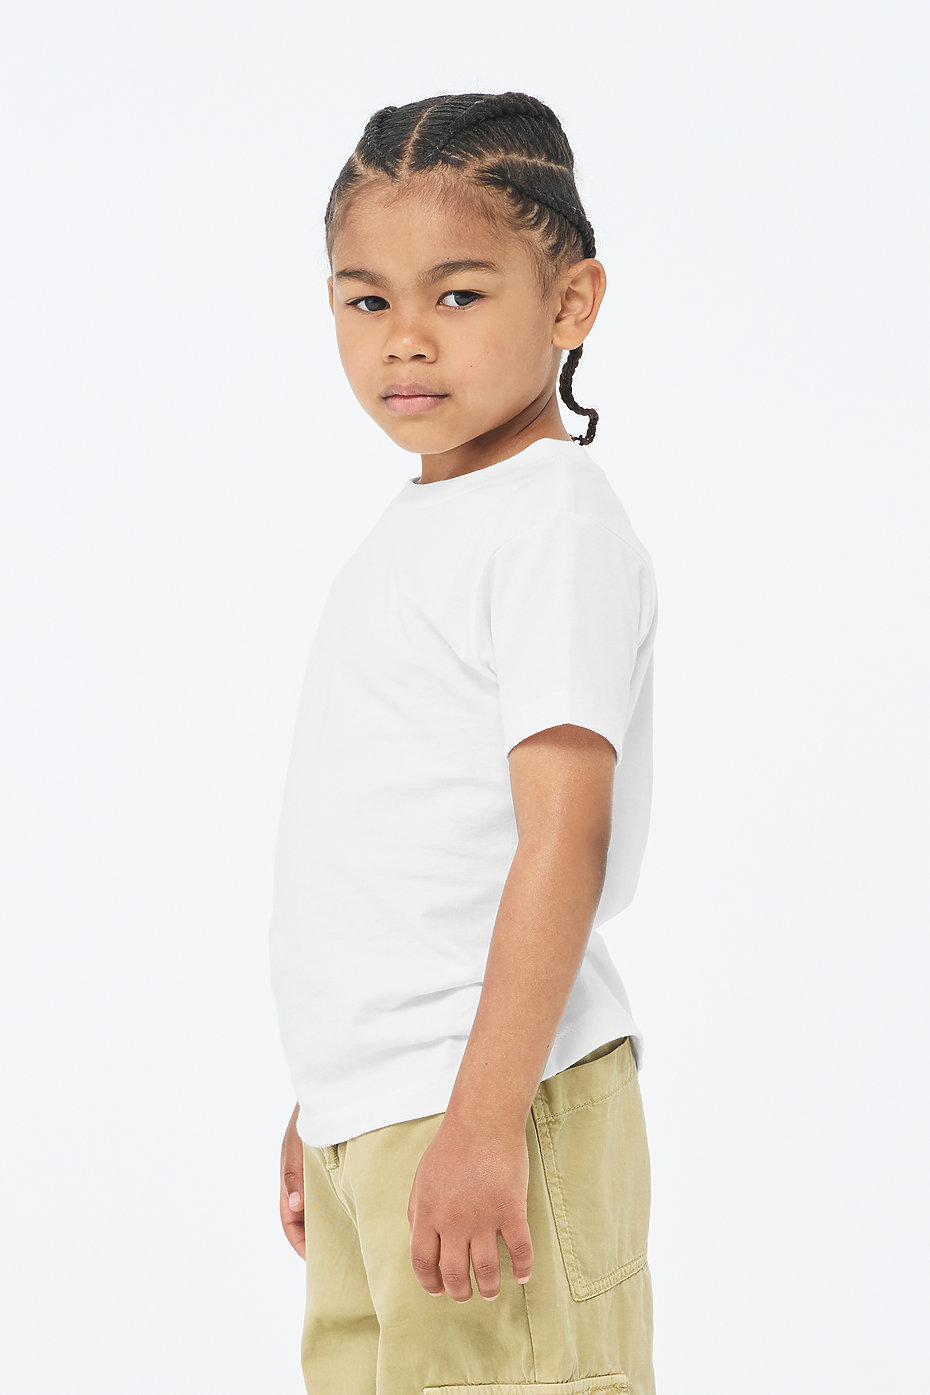 Half sleeves Custom Kids Sports Jersey, Size: Youth Sizes